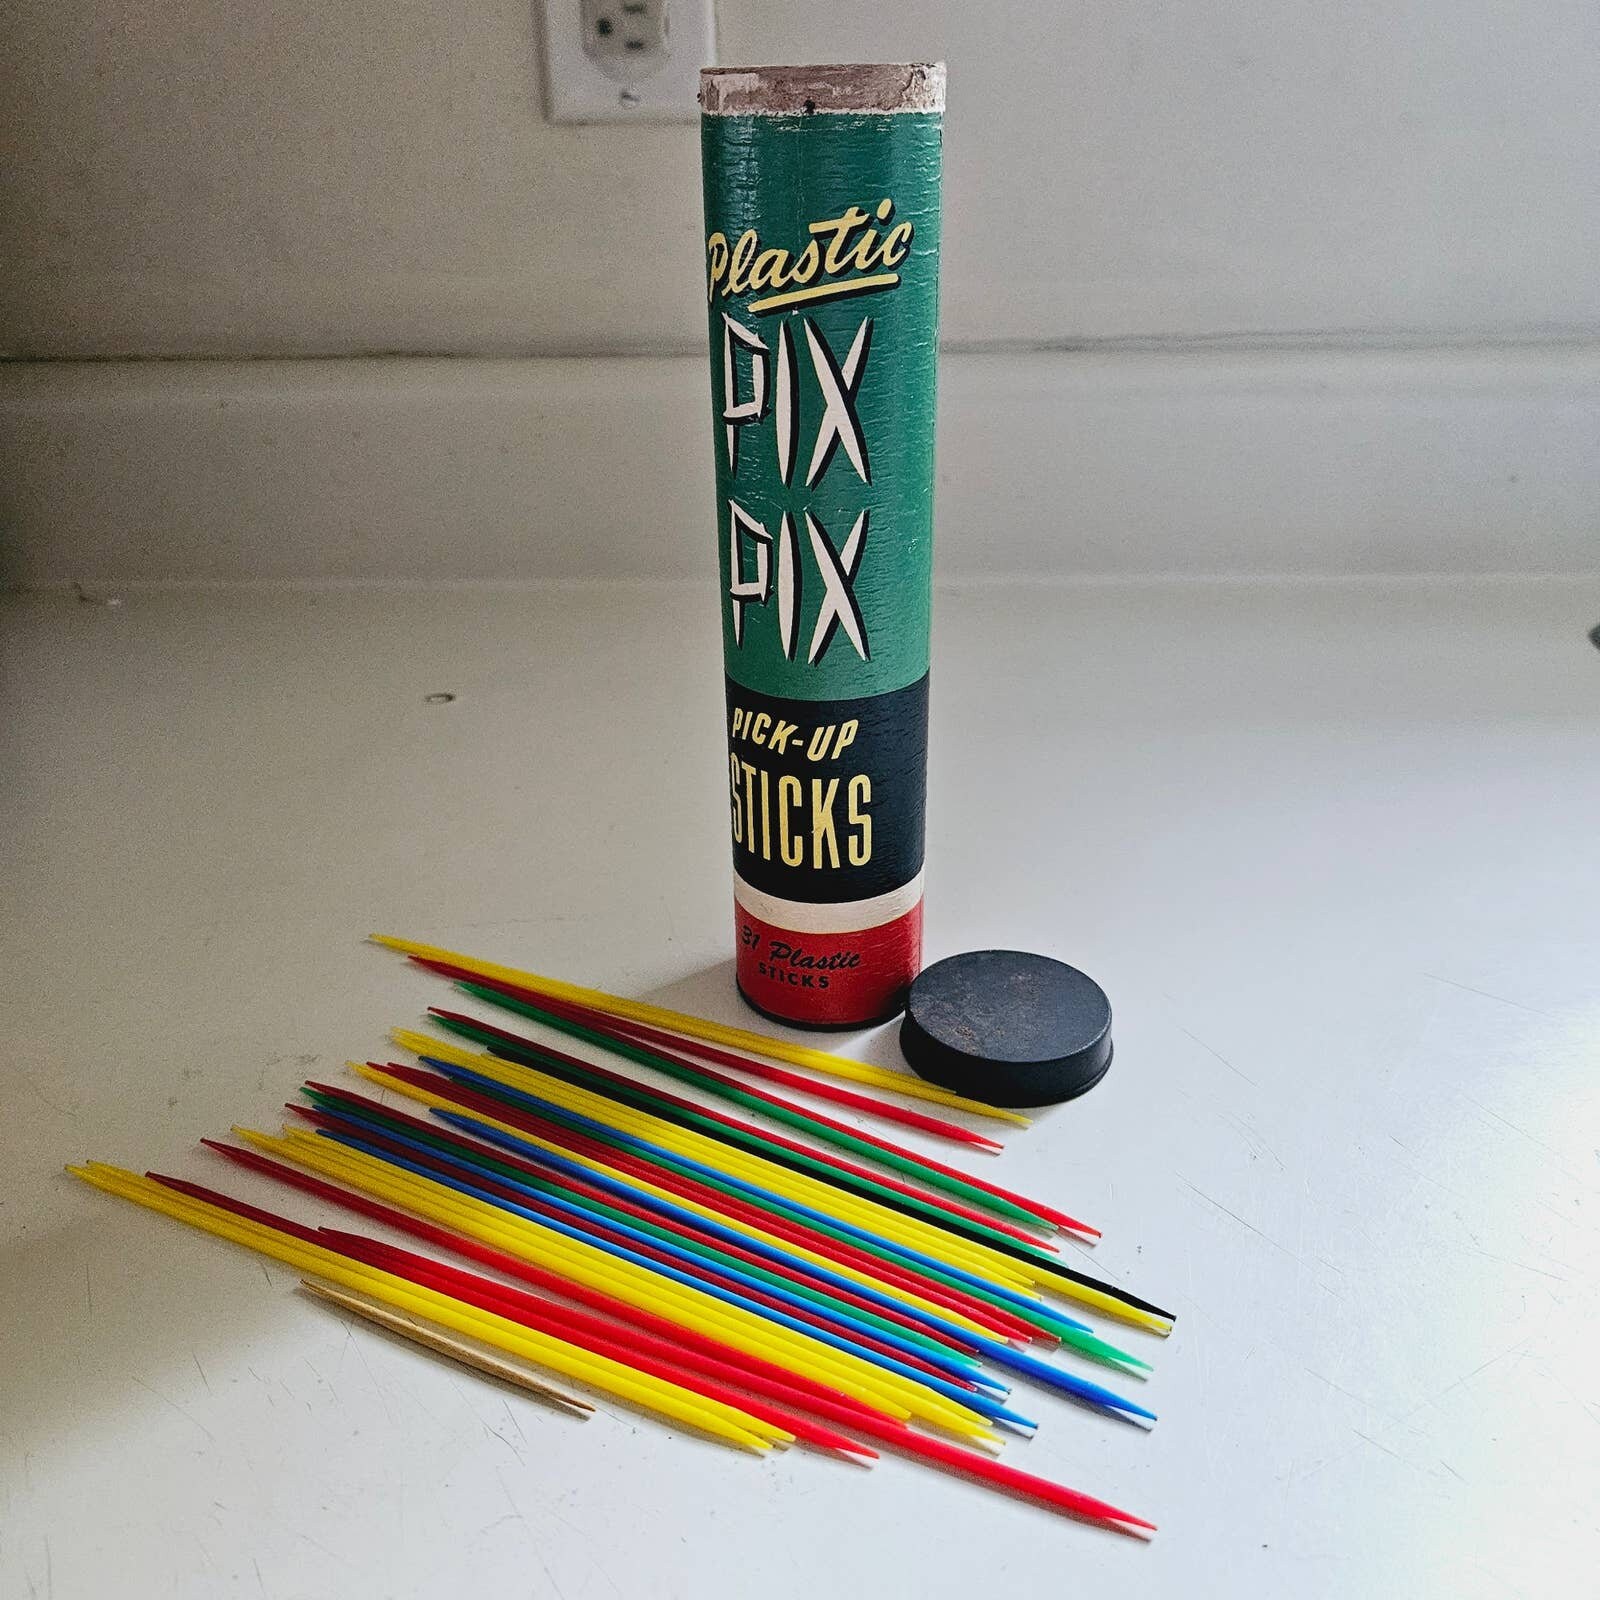 Pix Pix Pick up Sticks Game Mixed Lot of Plastic & Wood 50 Pcs. 